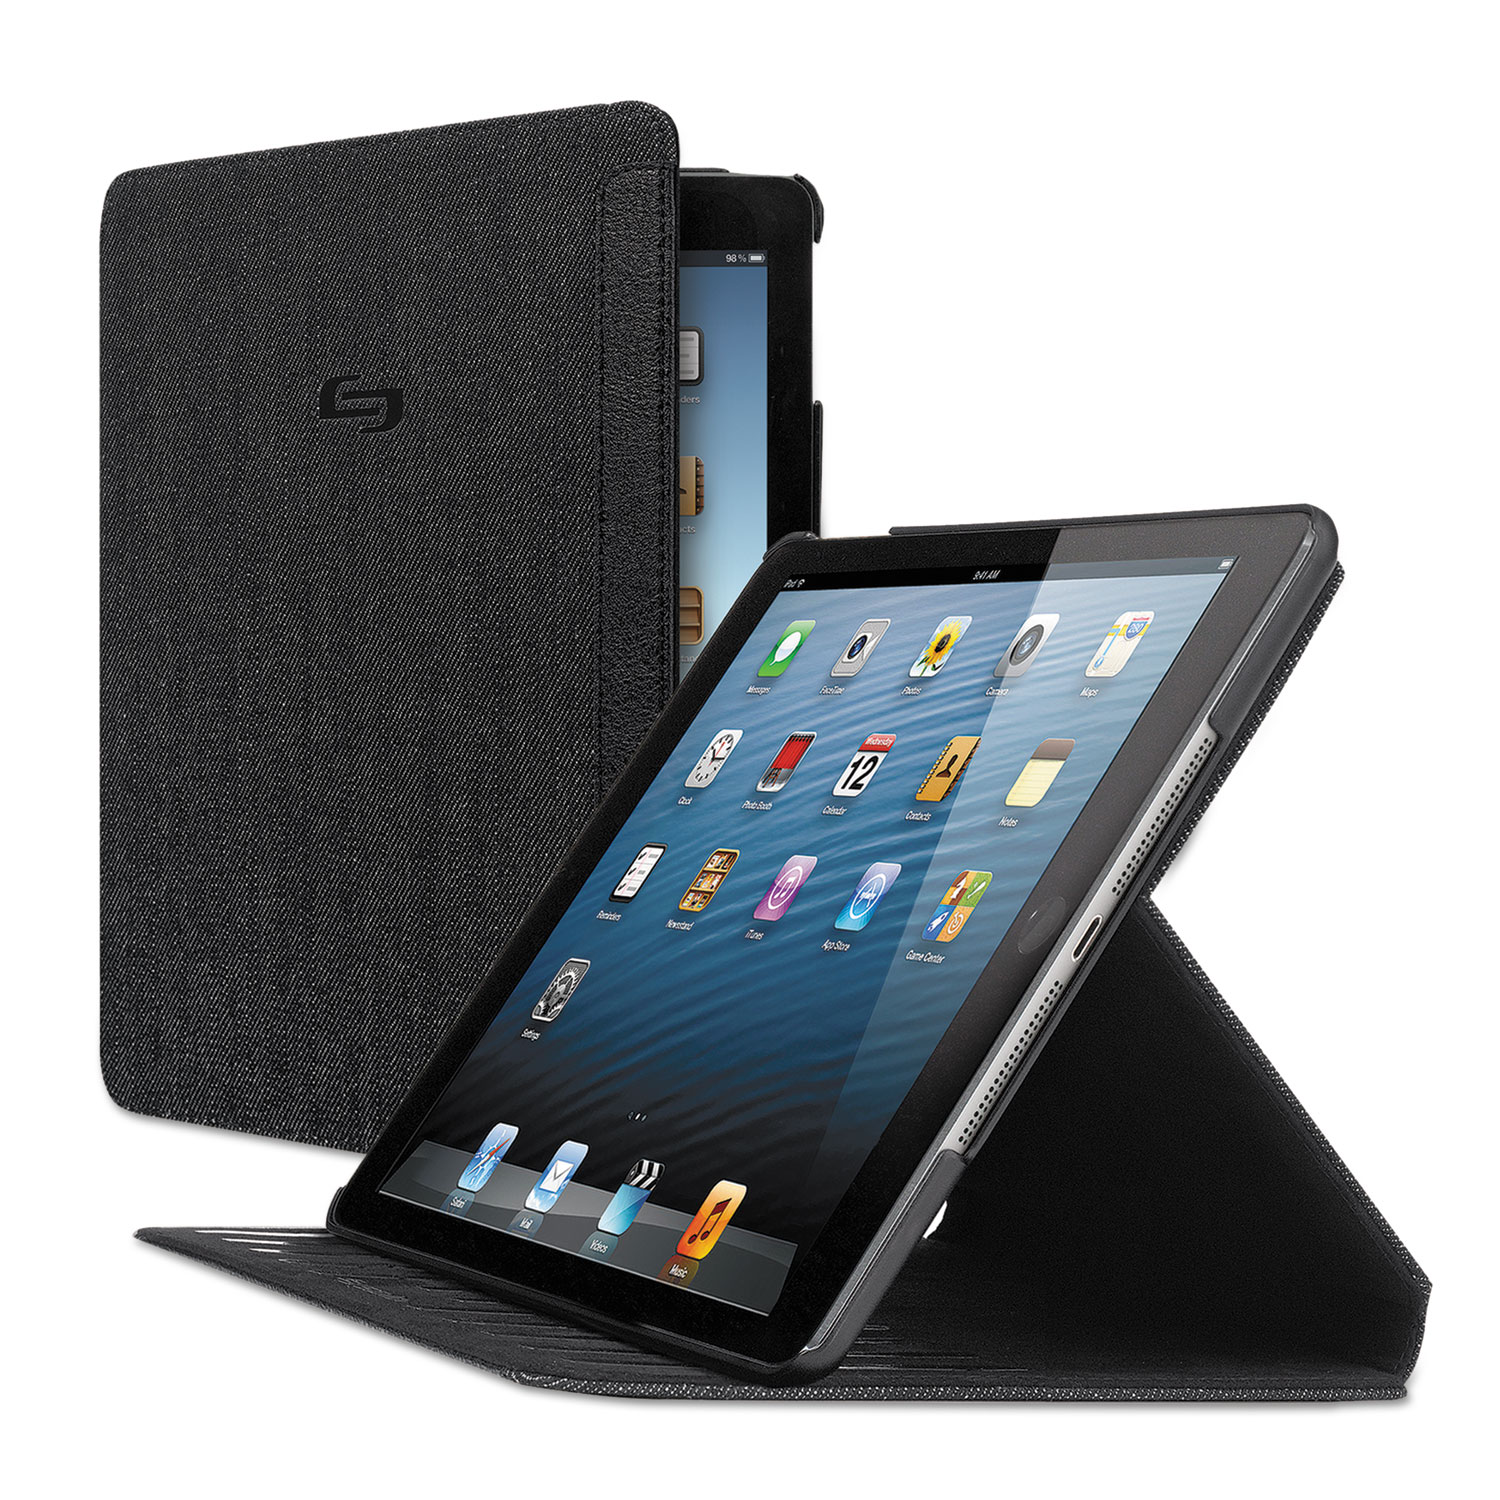 Sentinel Slim Case for iPad 2/3rd Gen, Black